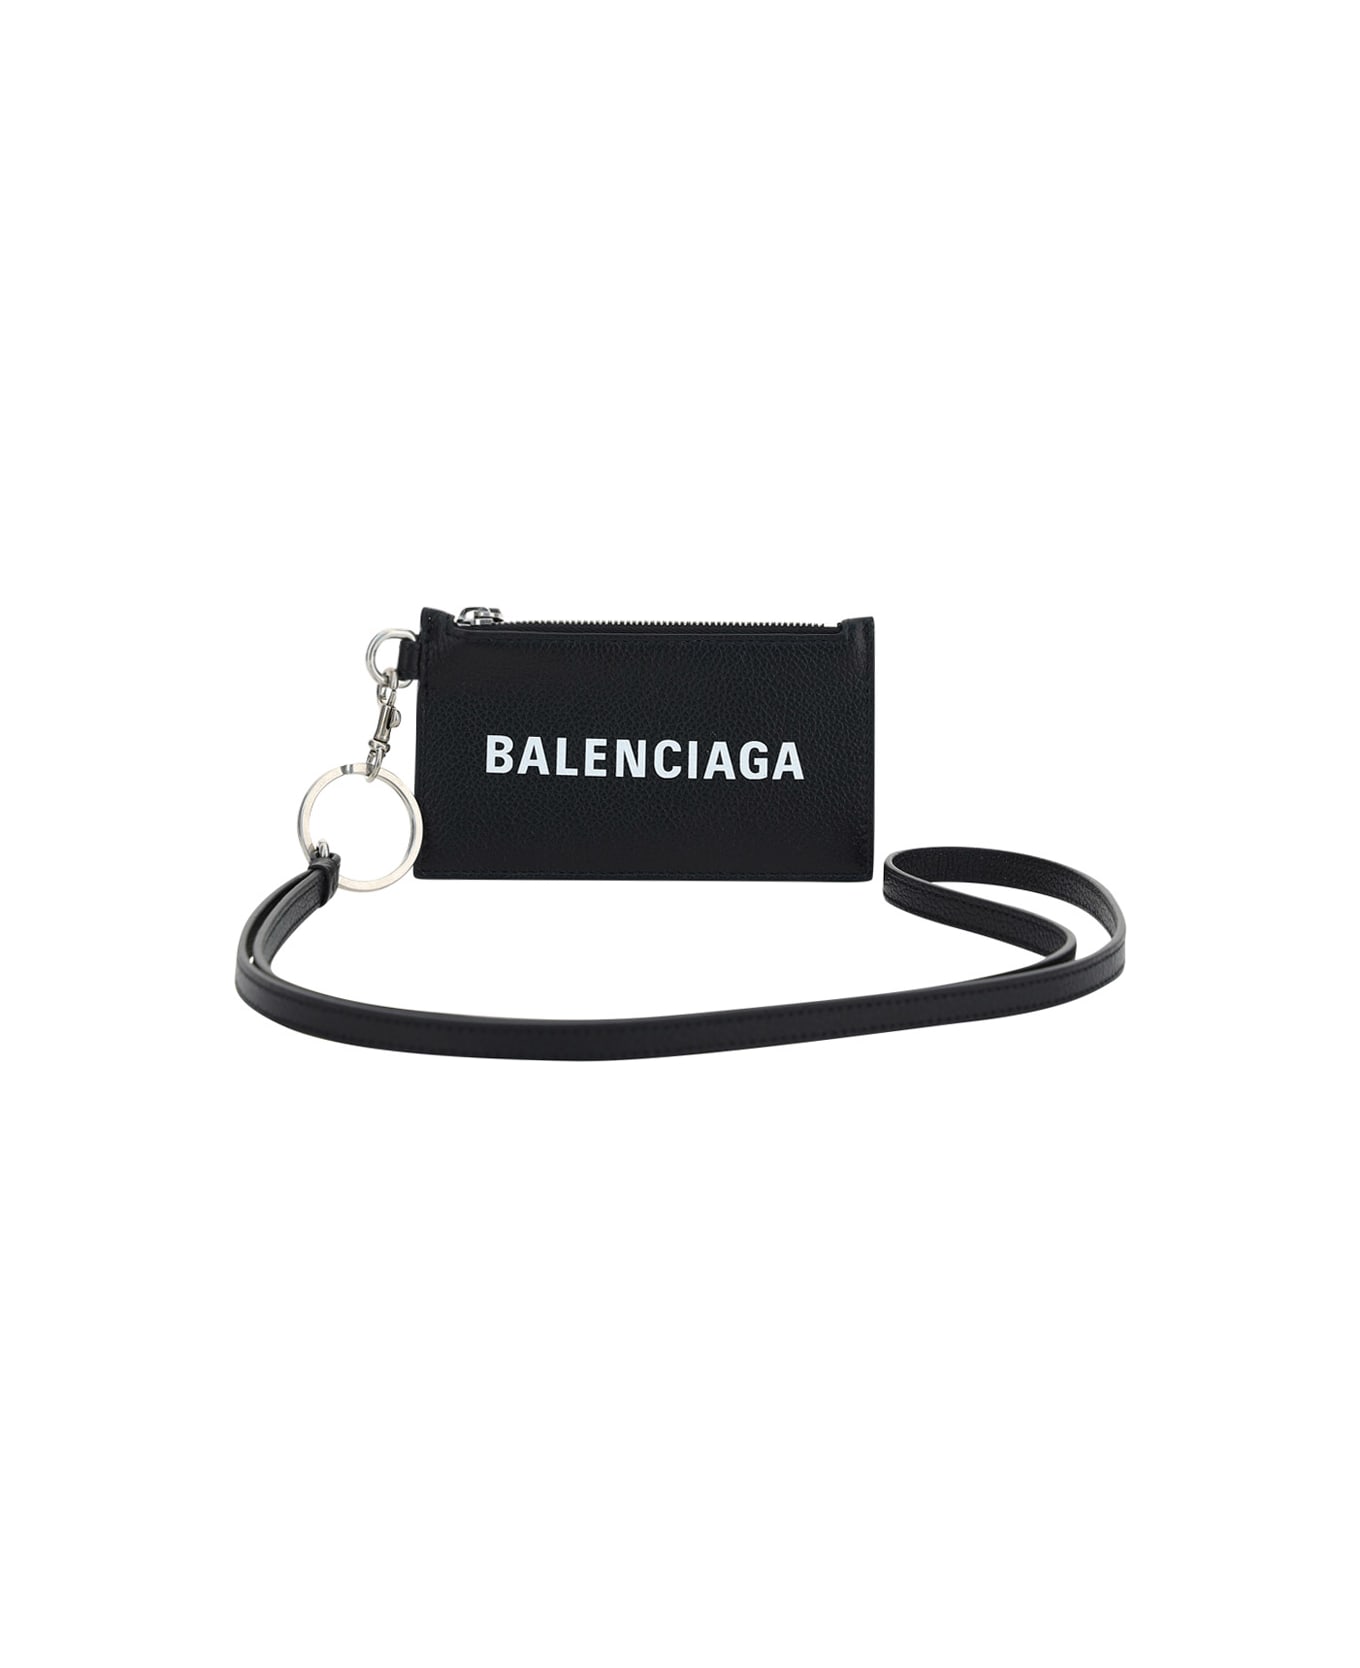 Balenciaga Neckstrap Cash Card Case - Black/l White